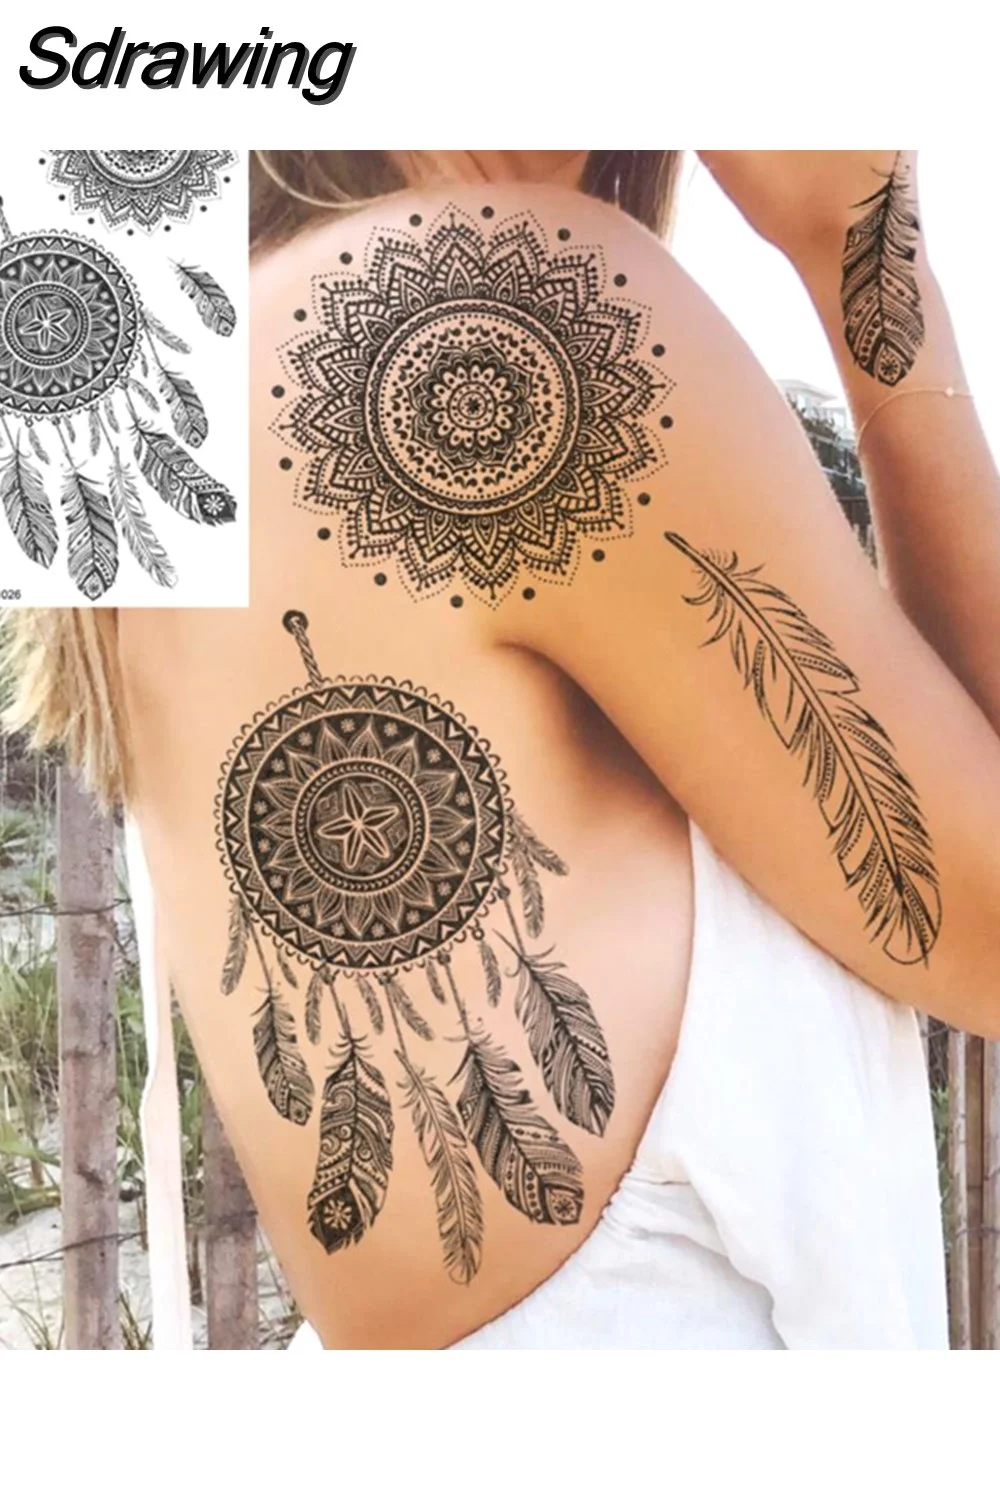 Sdrawing Henna Temporary Tattoos For Women Girls Feather Butterfly DreamCatcher Fake Gem Tattoo Sticker Chest Arm Tatoos Tribal 430-1